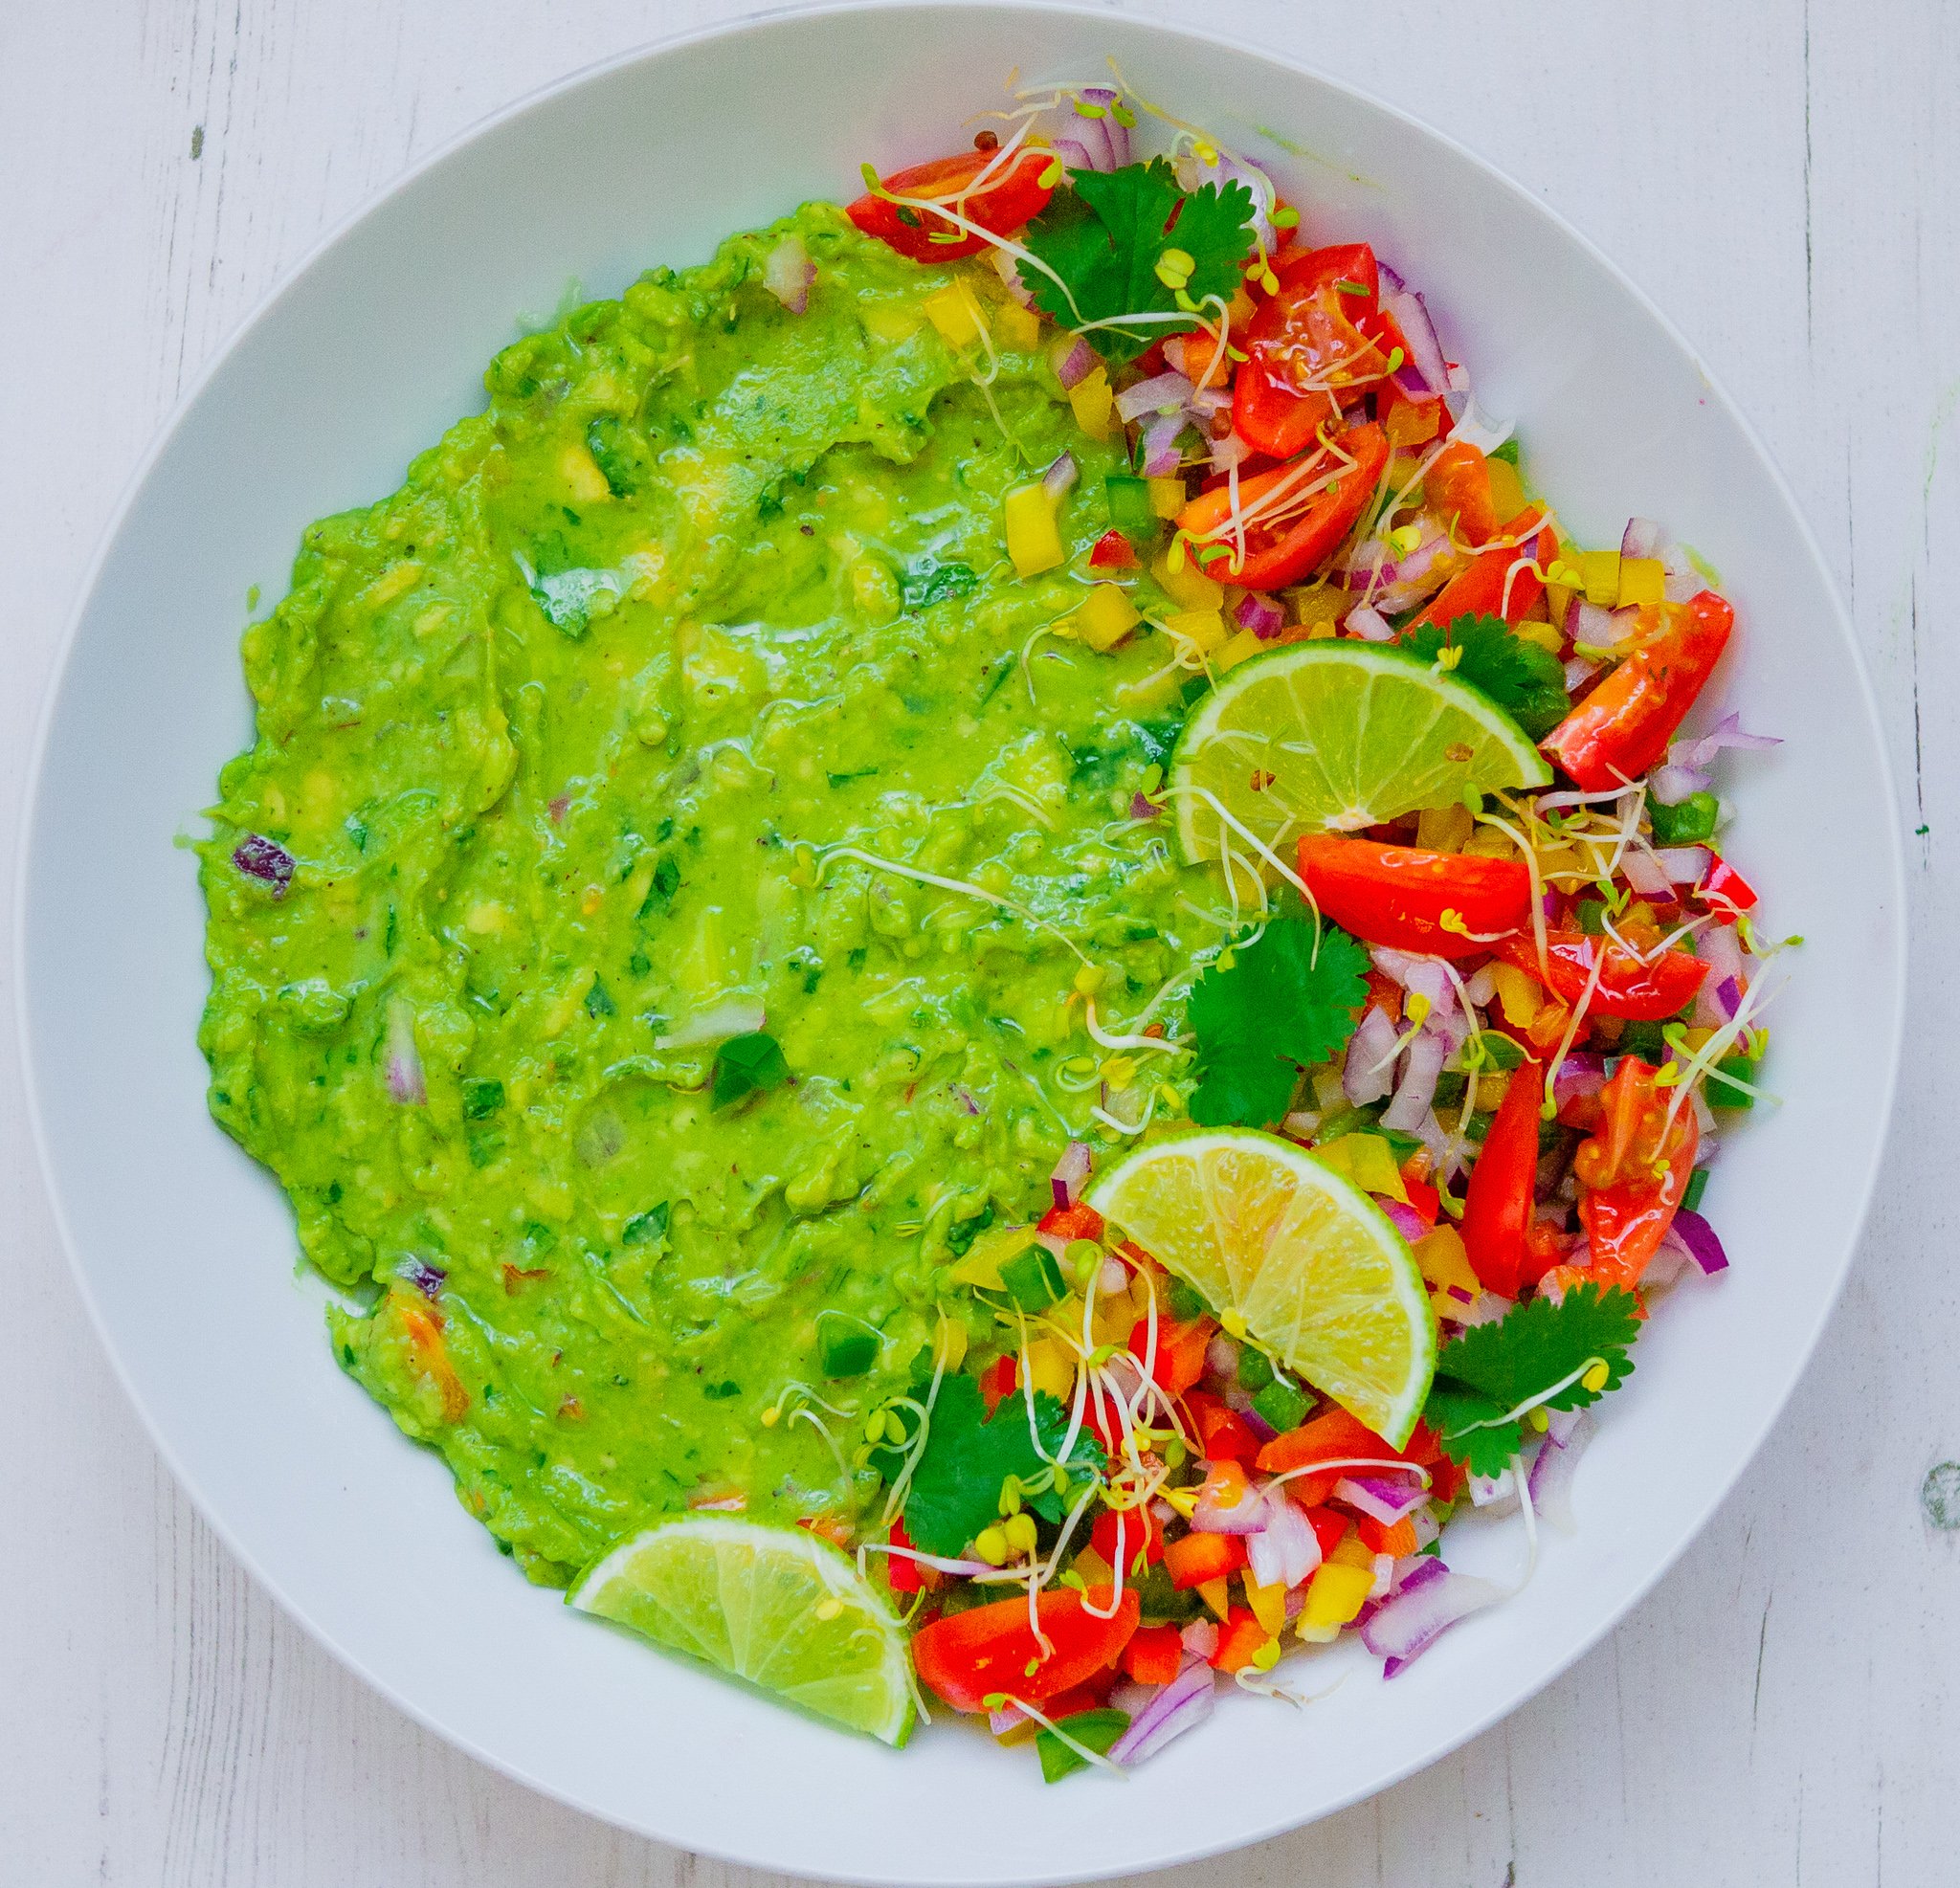 guacamole recipe by kam sokhi allergy chef